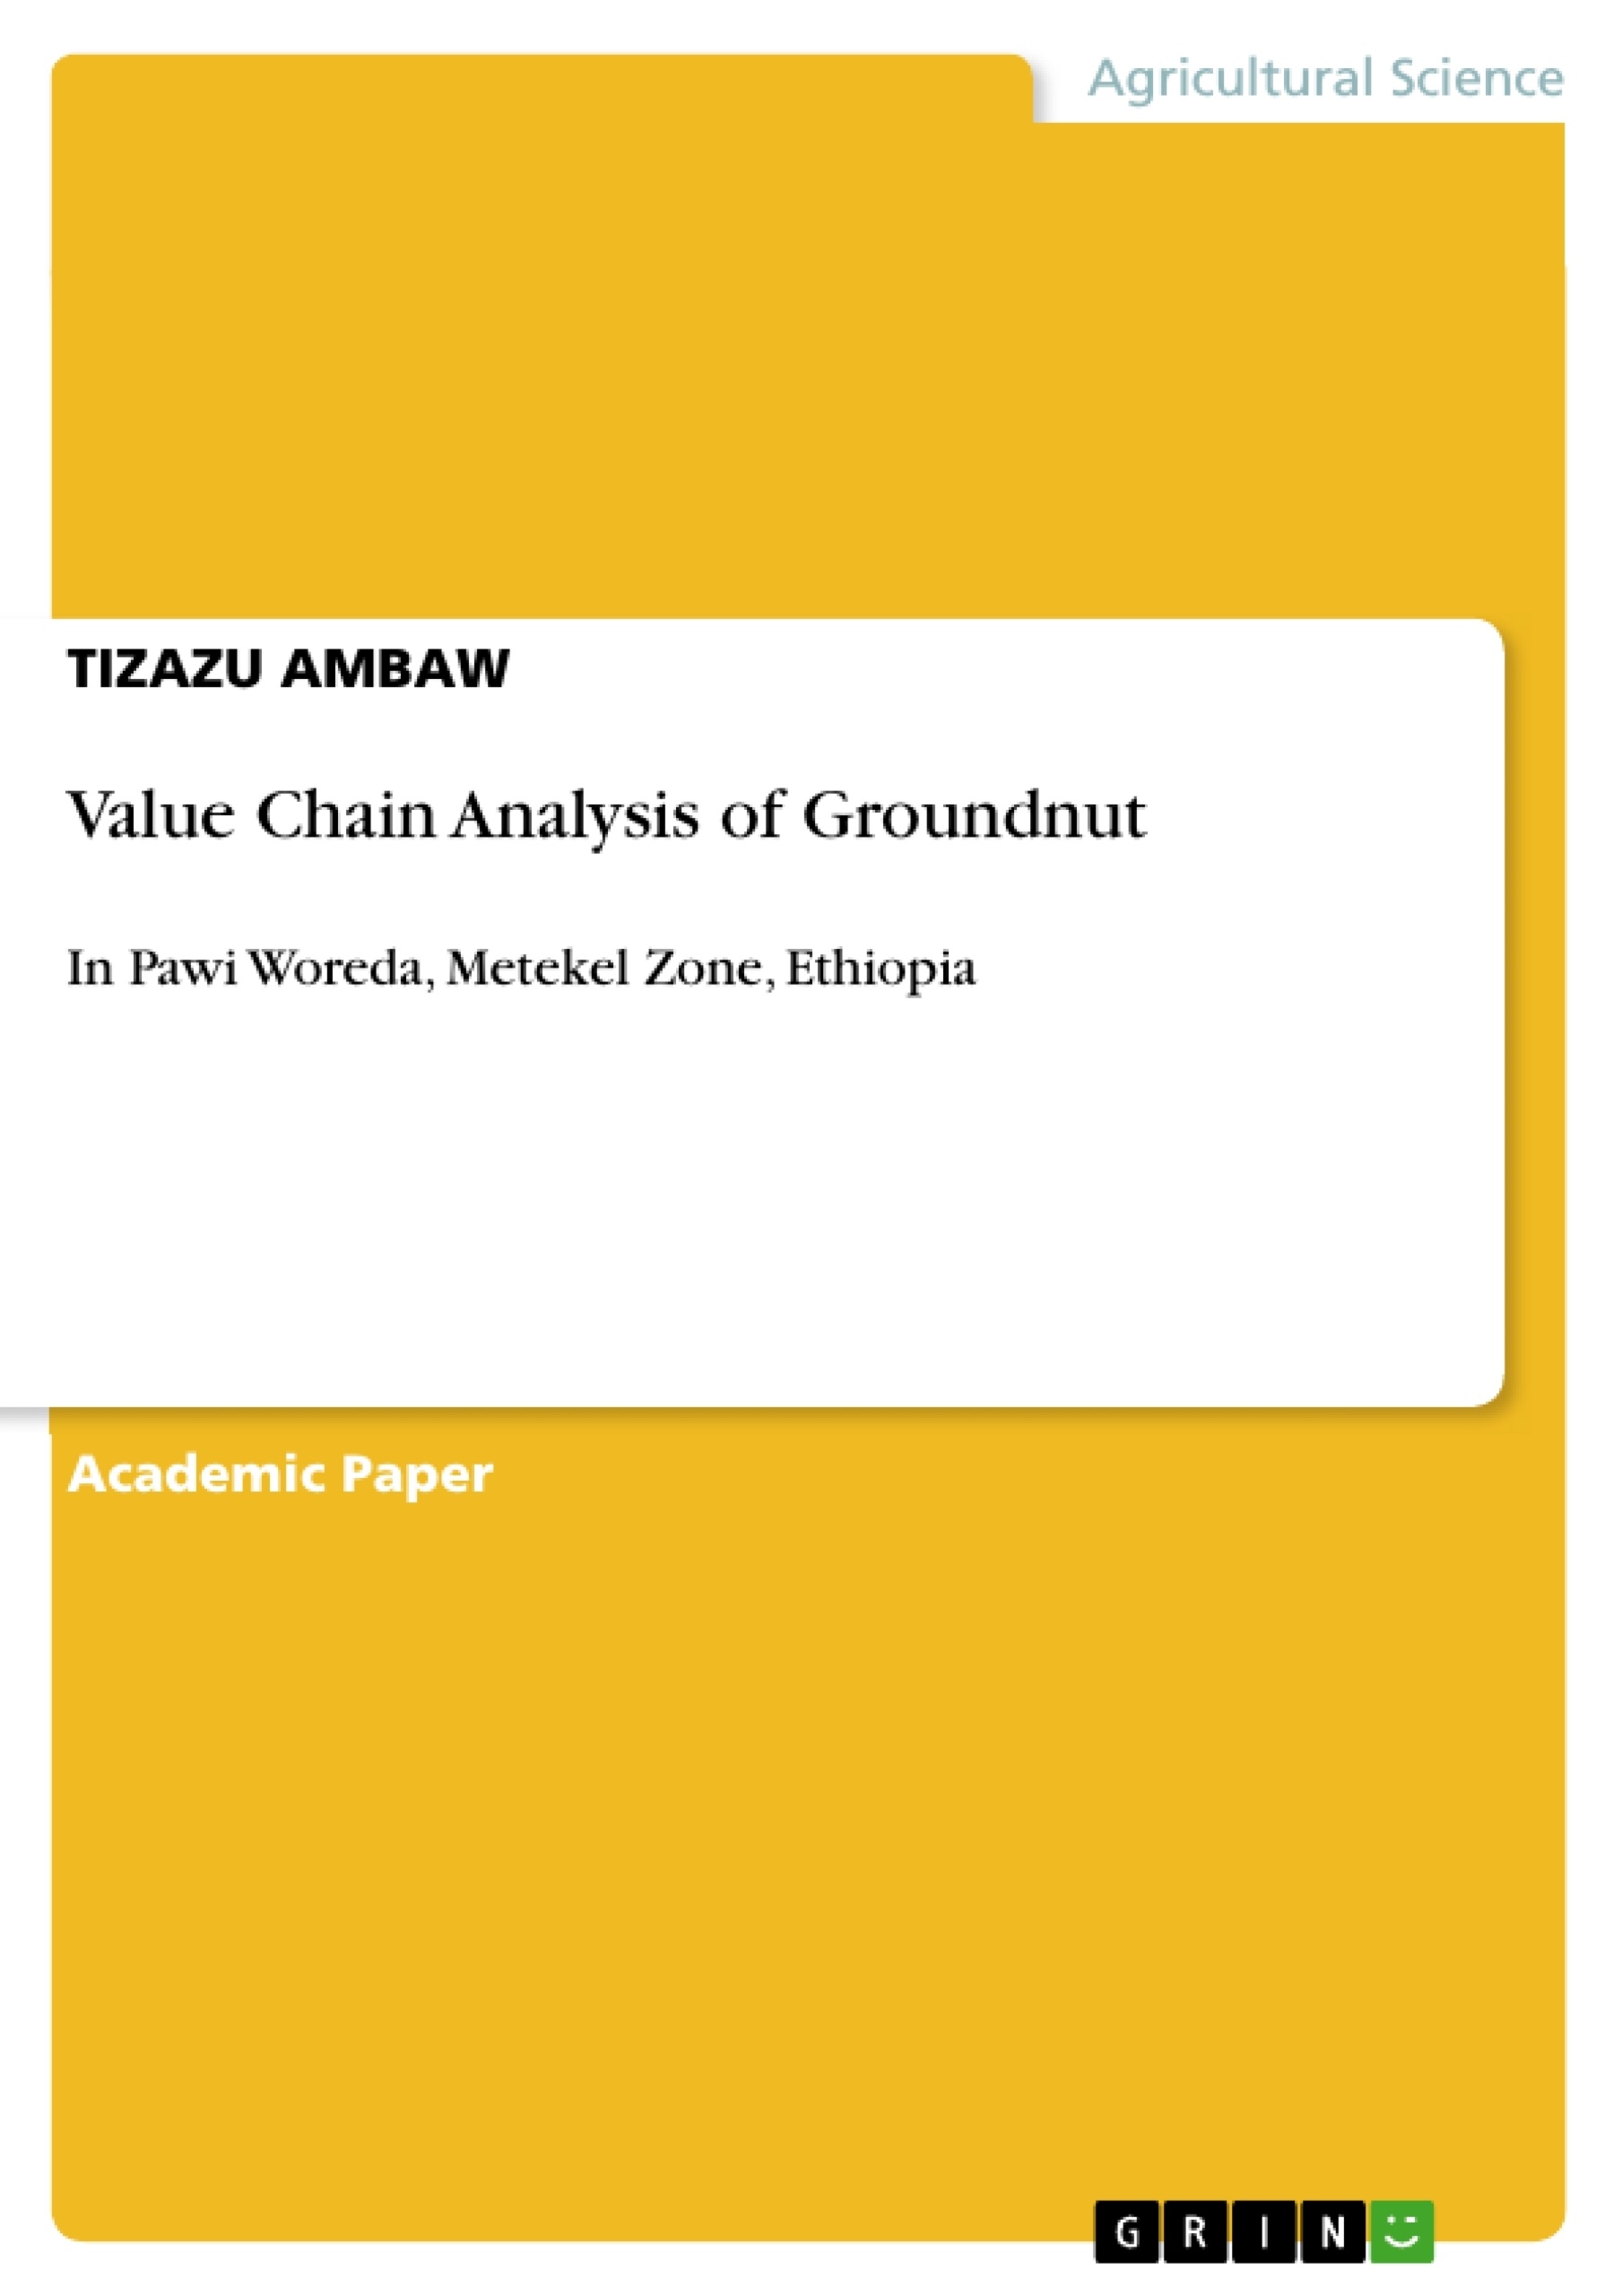 Título: Value Chain Analysis of Groundnut